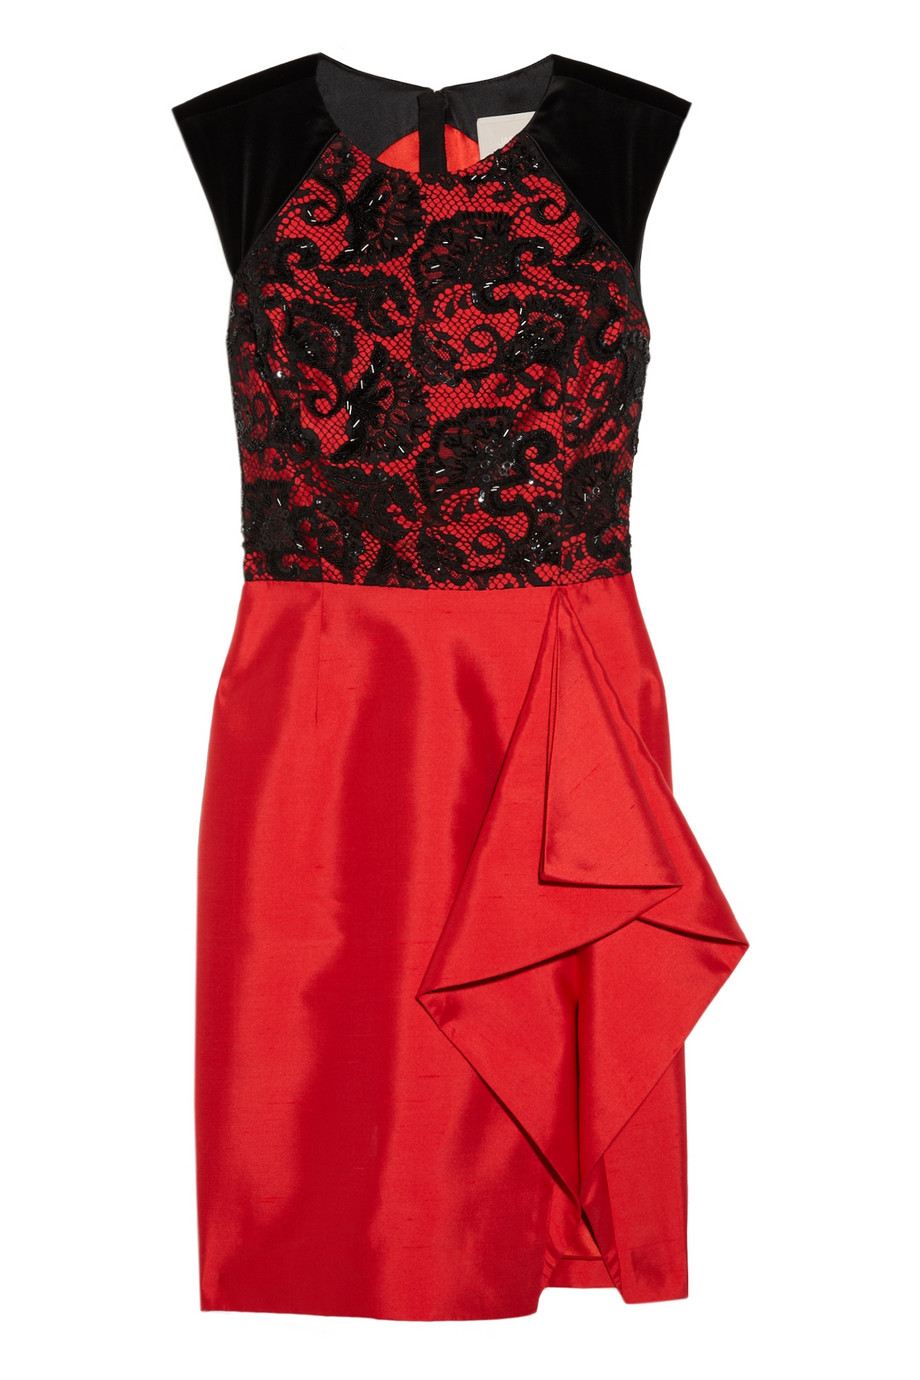 Jason wu Embellished Laceoverlay Silkshantung Dress in Red | Lyst